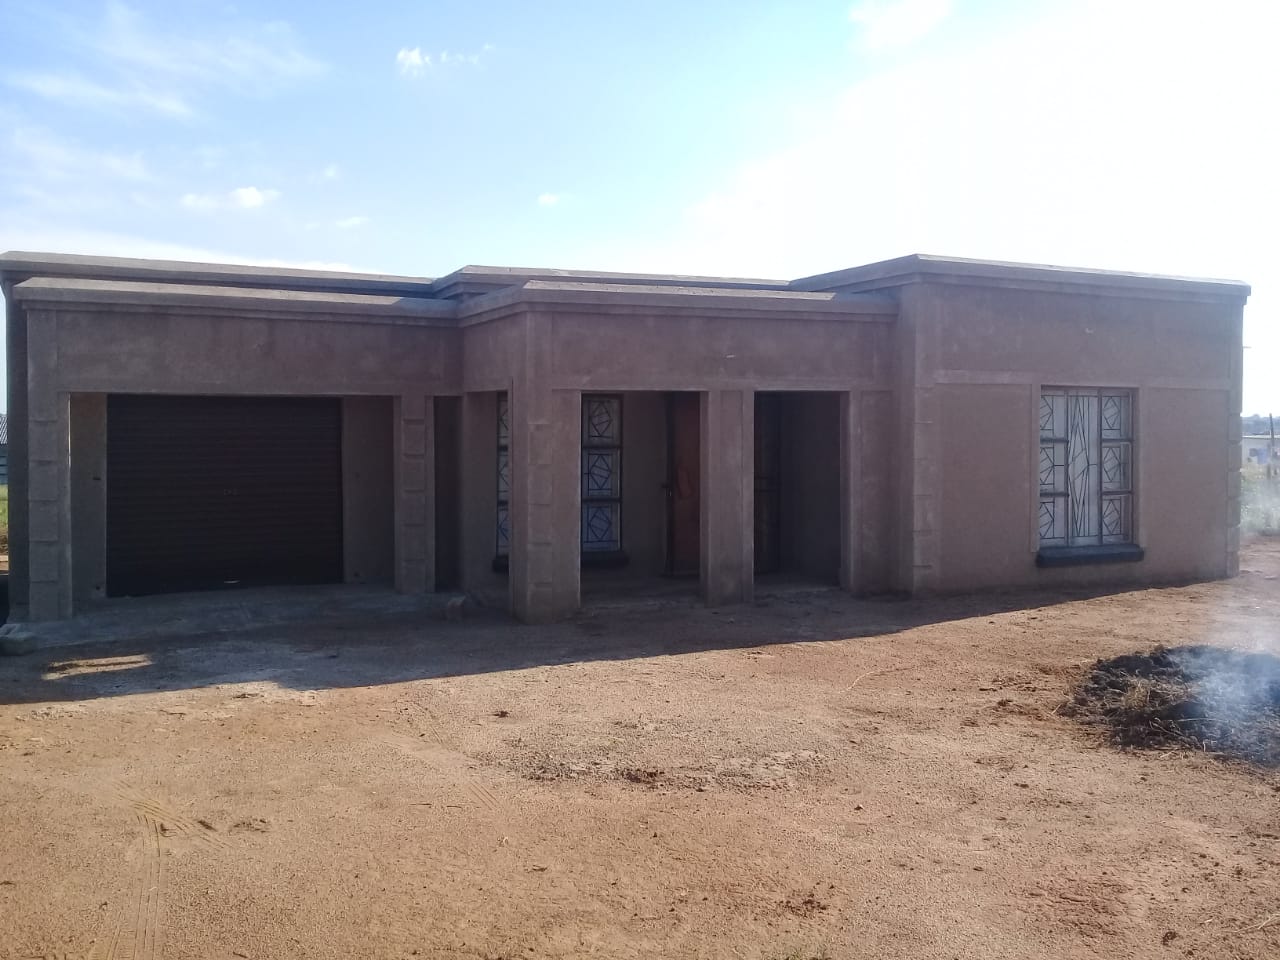 For sale Houses  Garages Mpumalanga  Listings And Prices Waa2